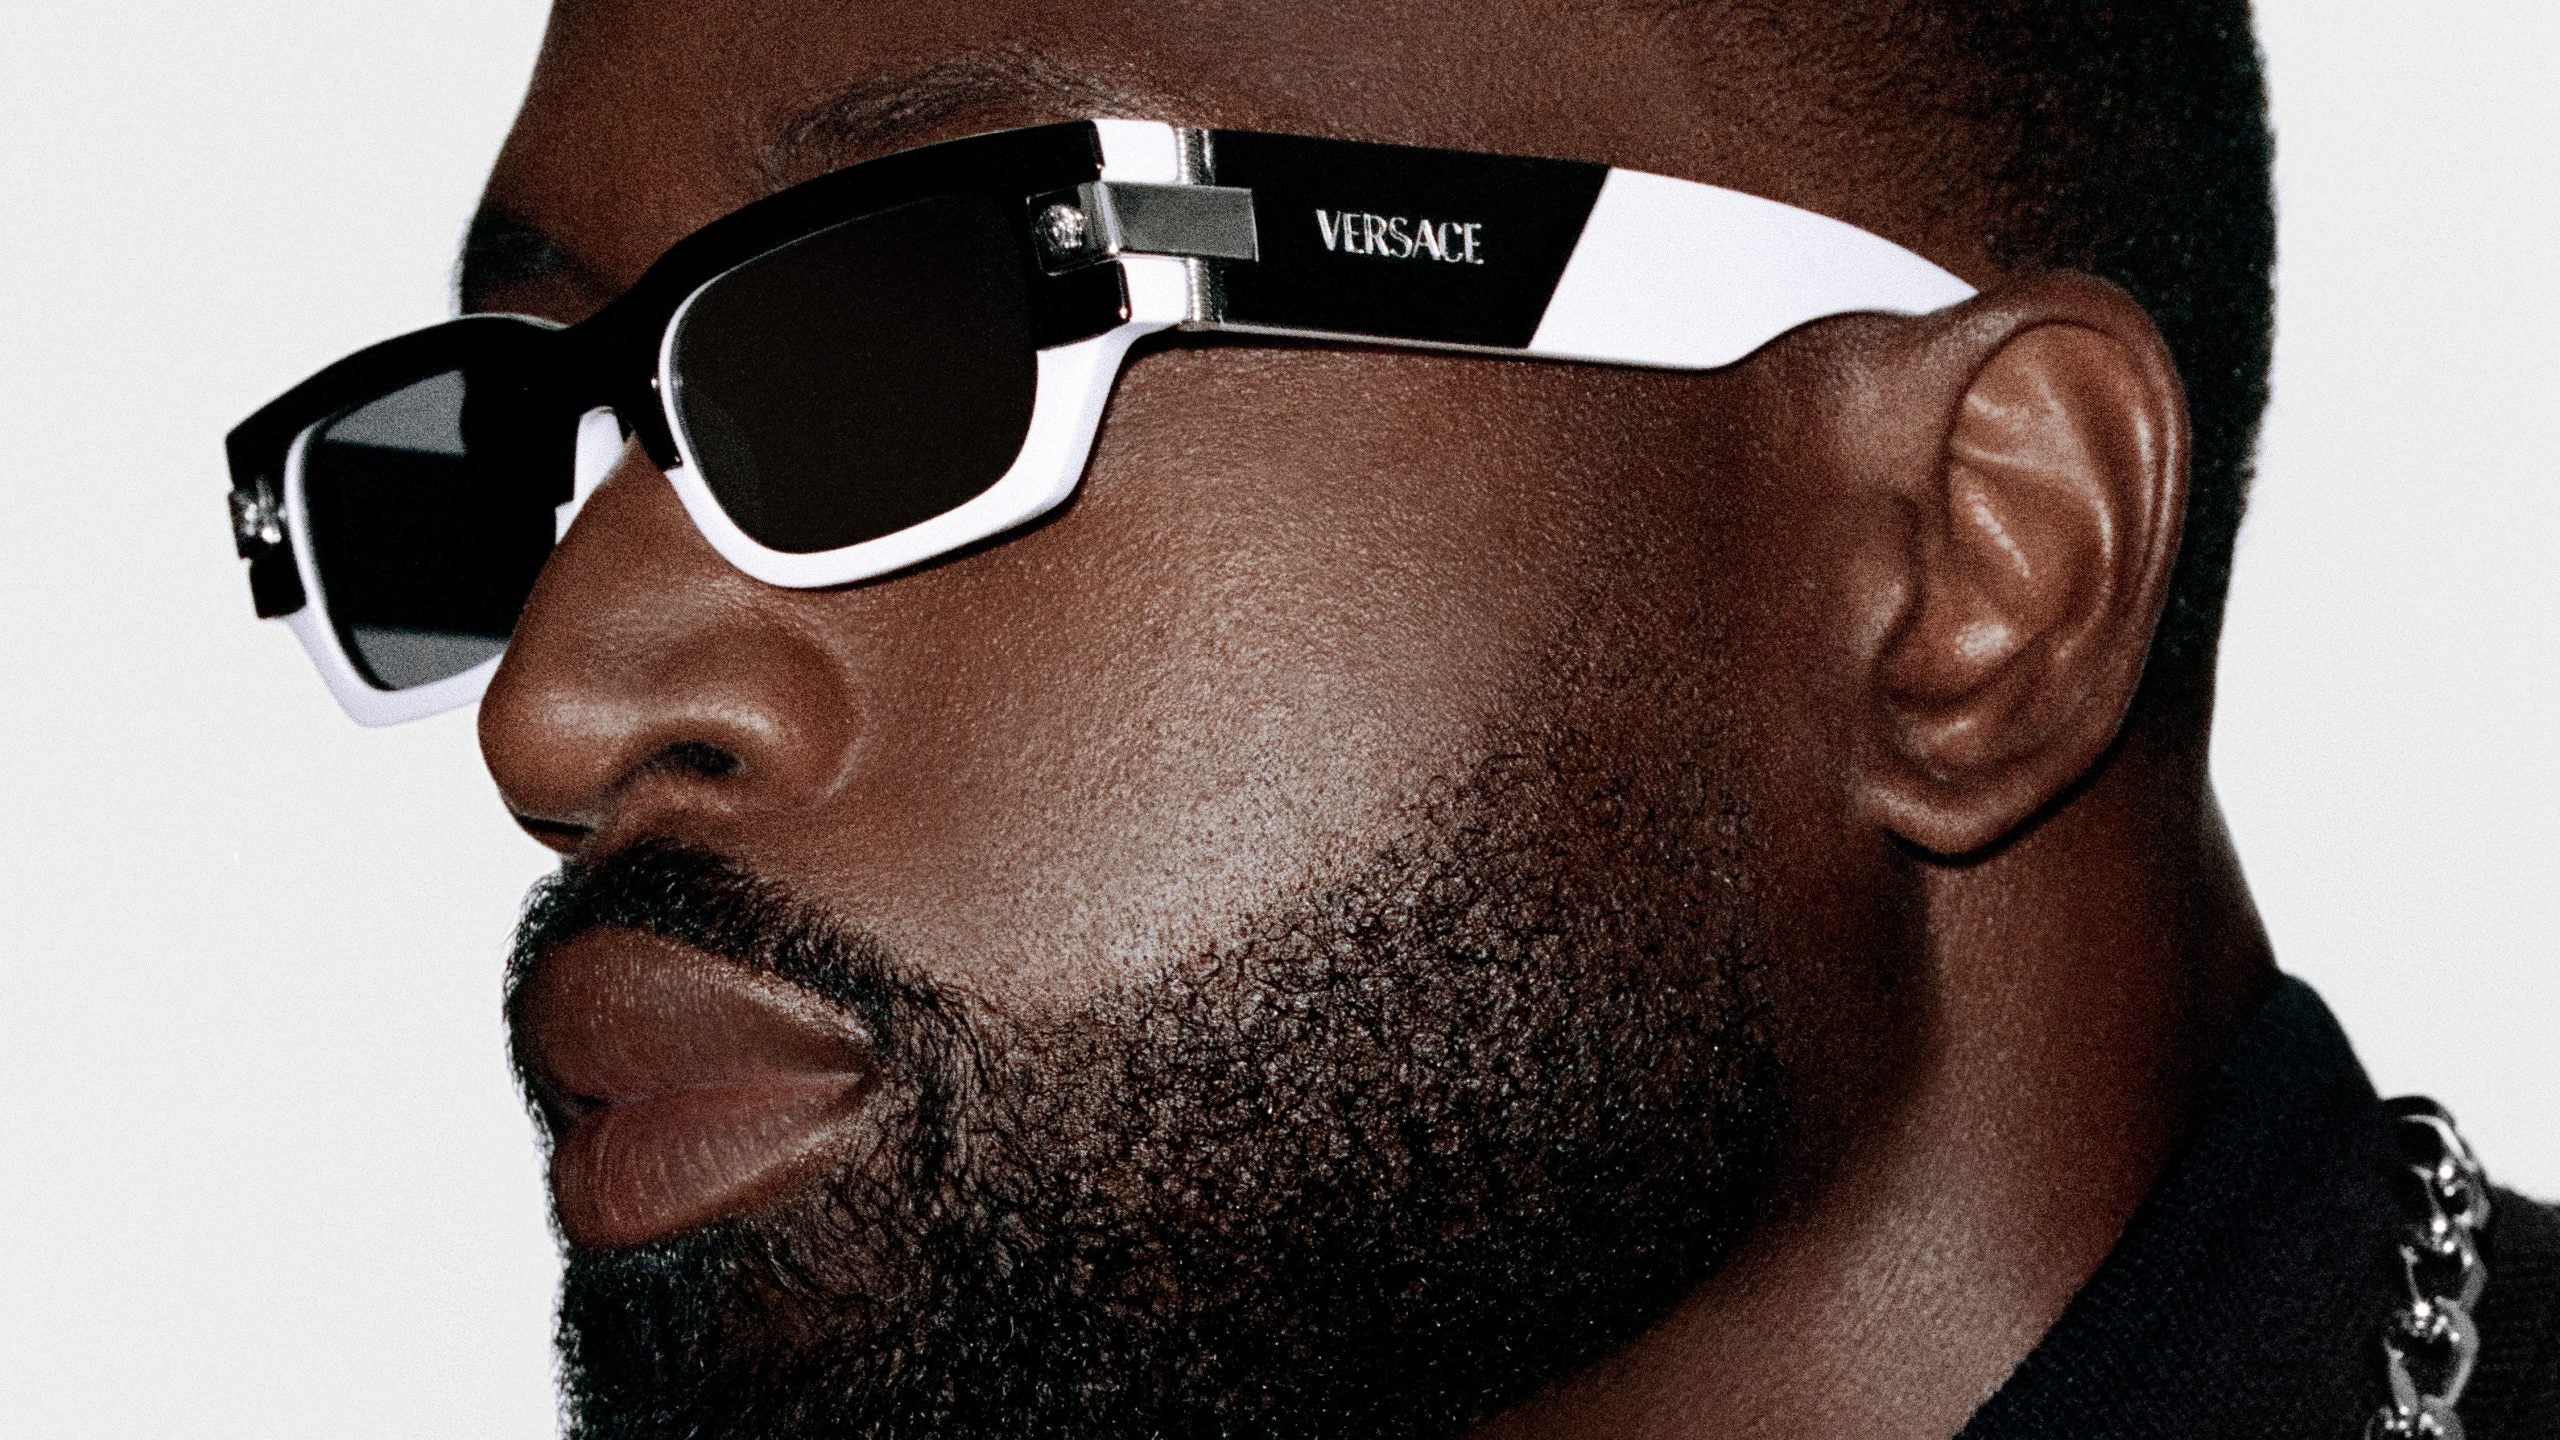 Versace Taps NBA Star Dwyane Wade For Its Latest Eyewear Campaign